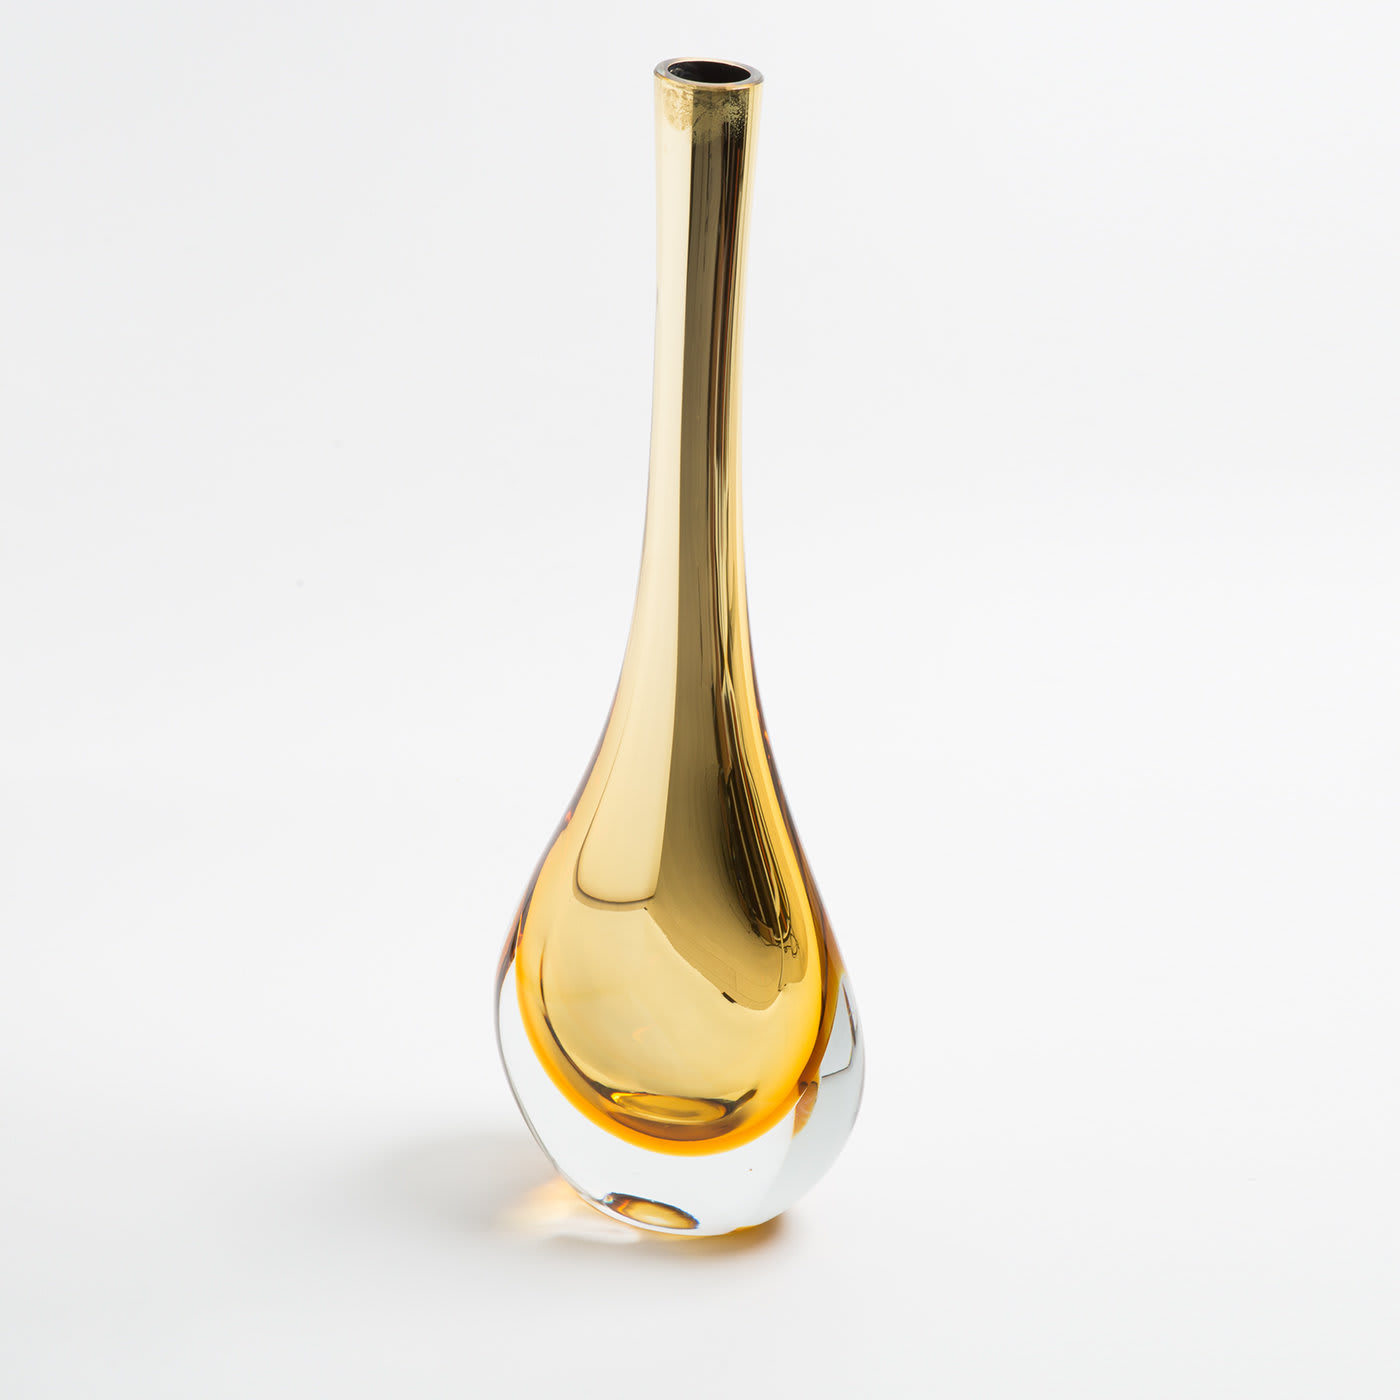 Narciso Vase - Fornace Mian